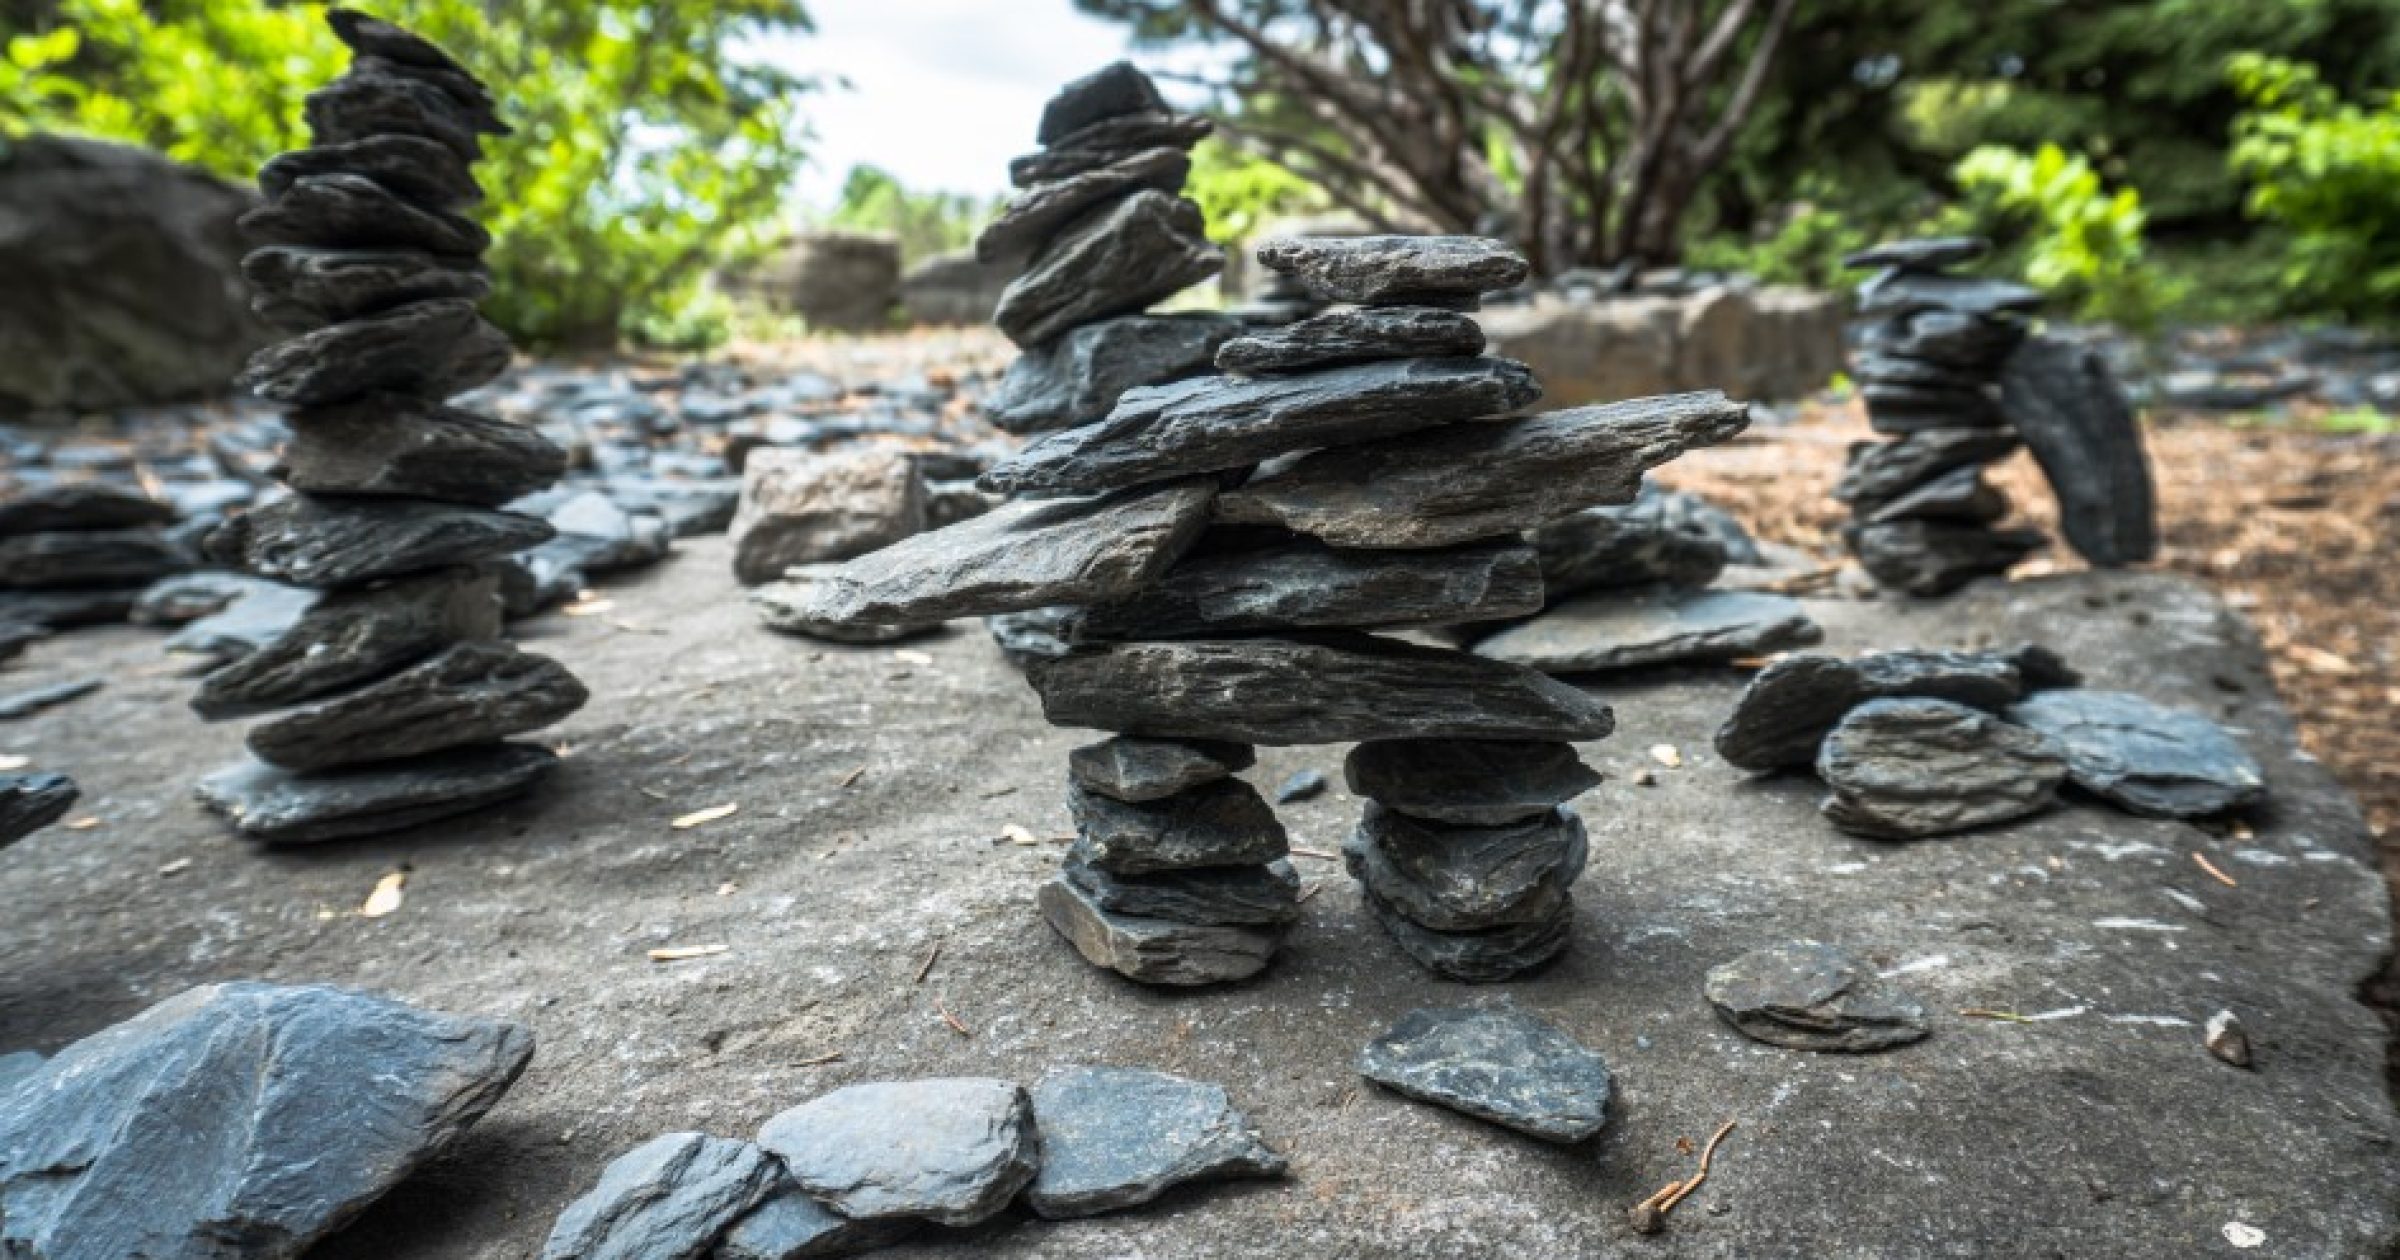 An inuksuk manmade human or cross shaped stone landmark or cairn